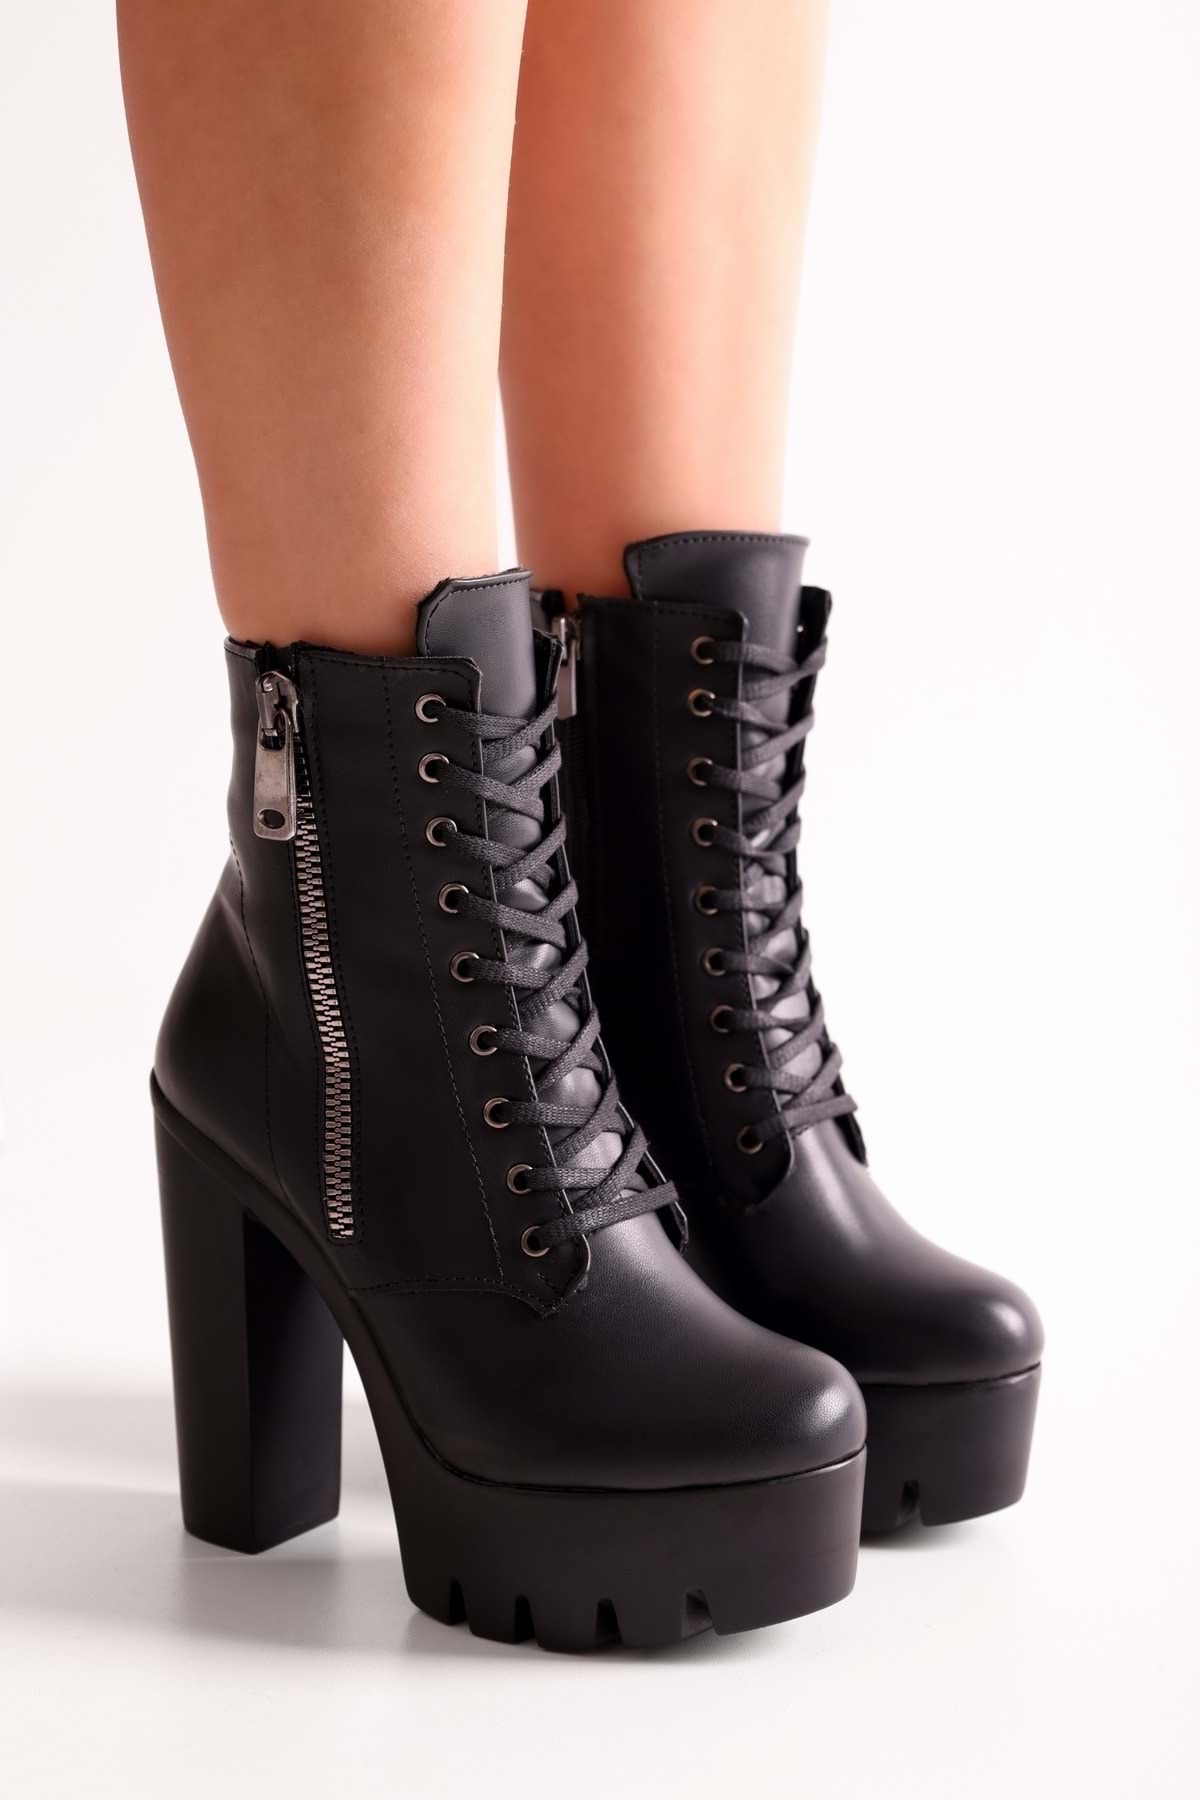 Shoeberry Women's Audrey Black Skin High Heels Boots Black Skin